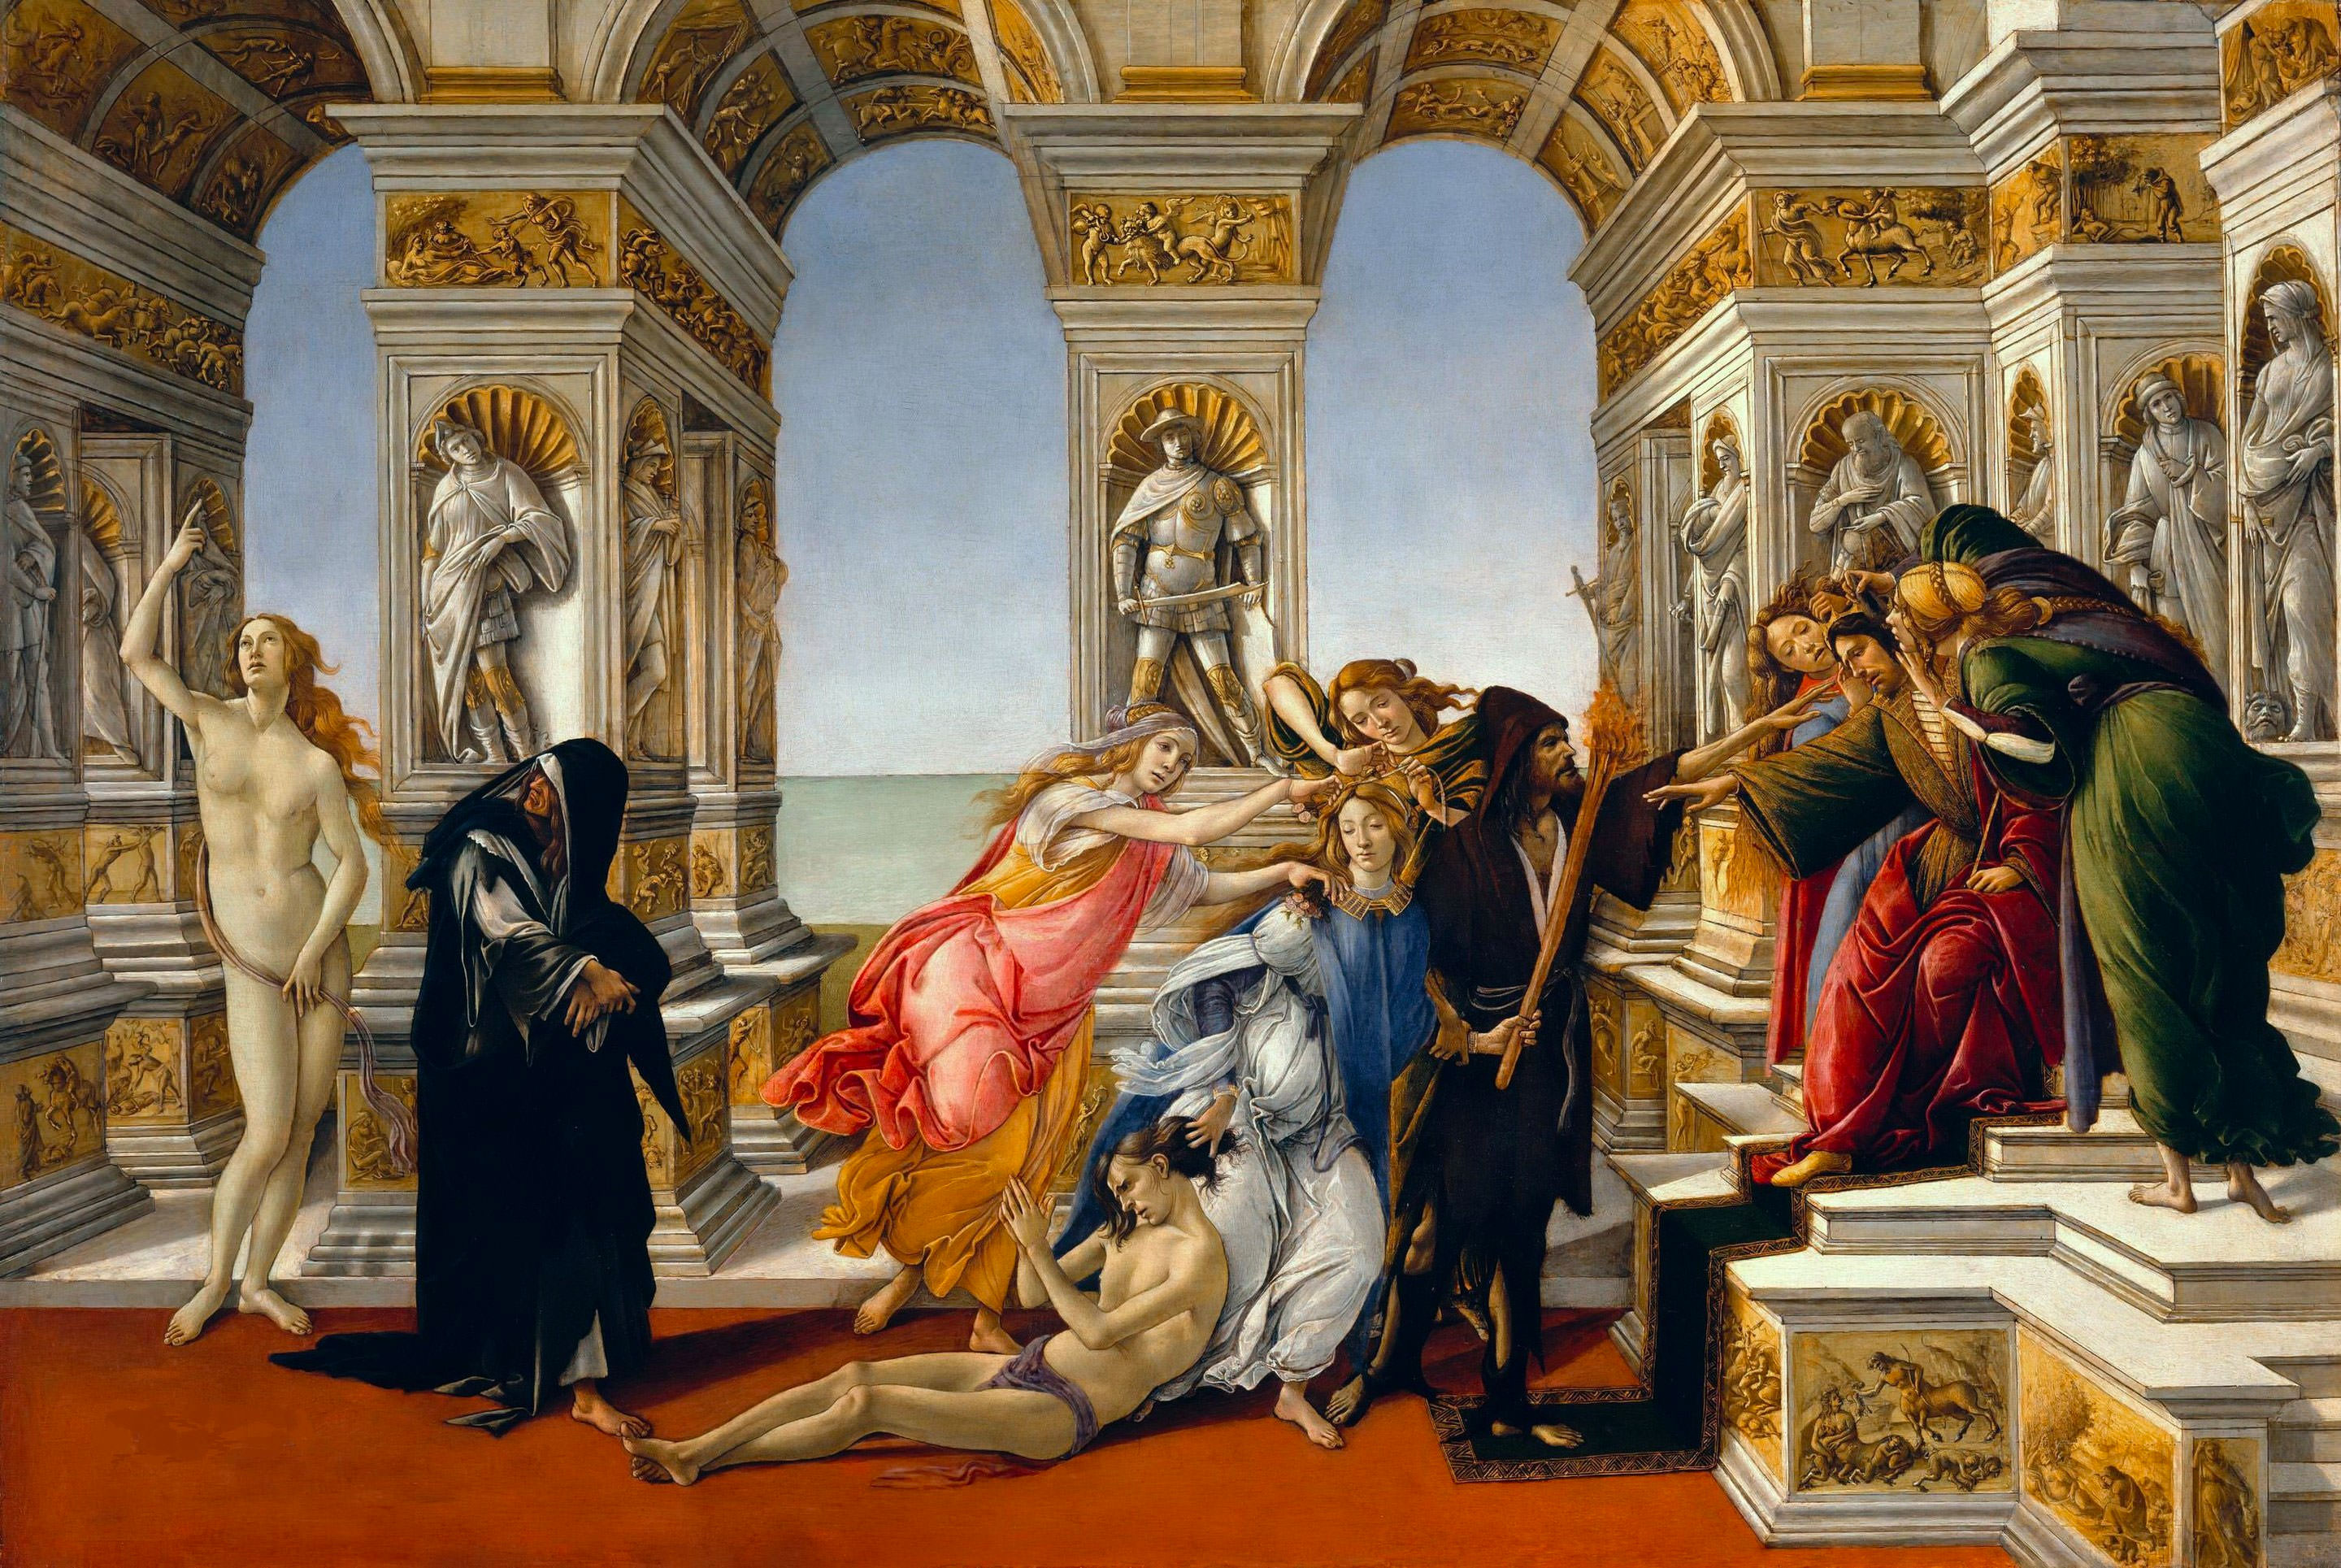 Botticelli Sandro - Die Verleumdung des Apelles